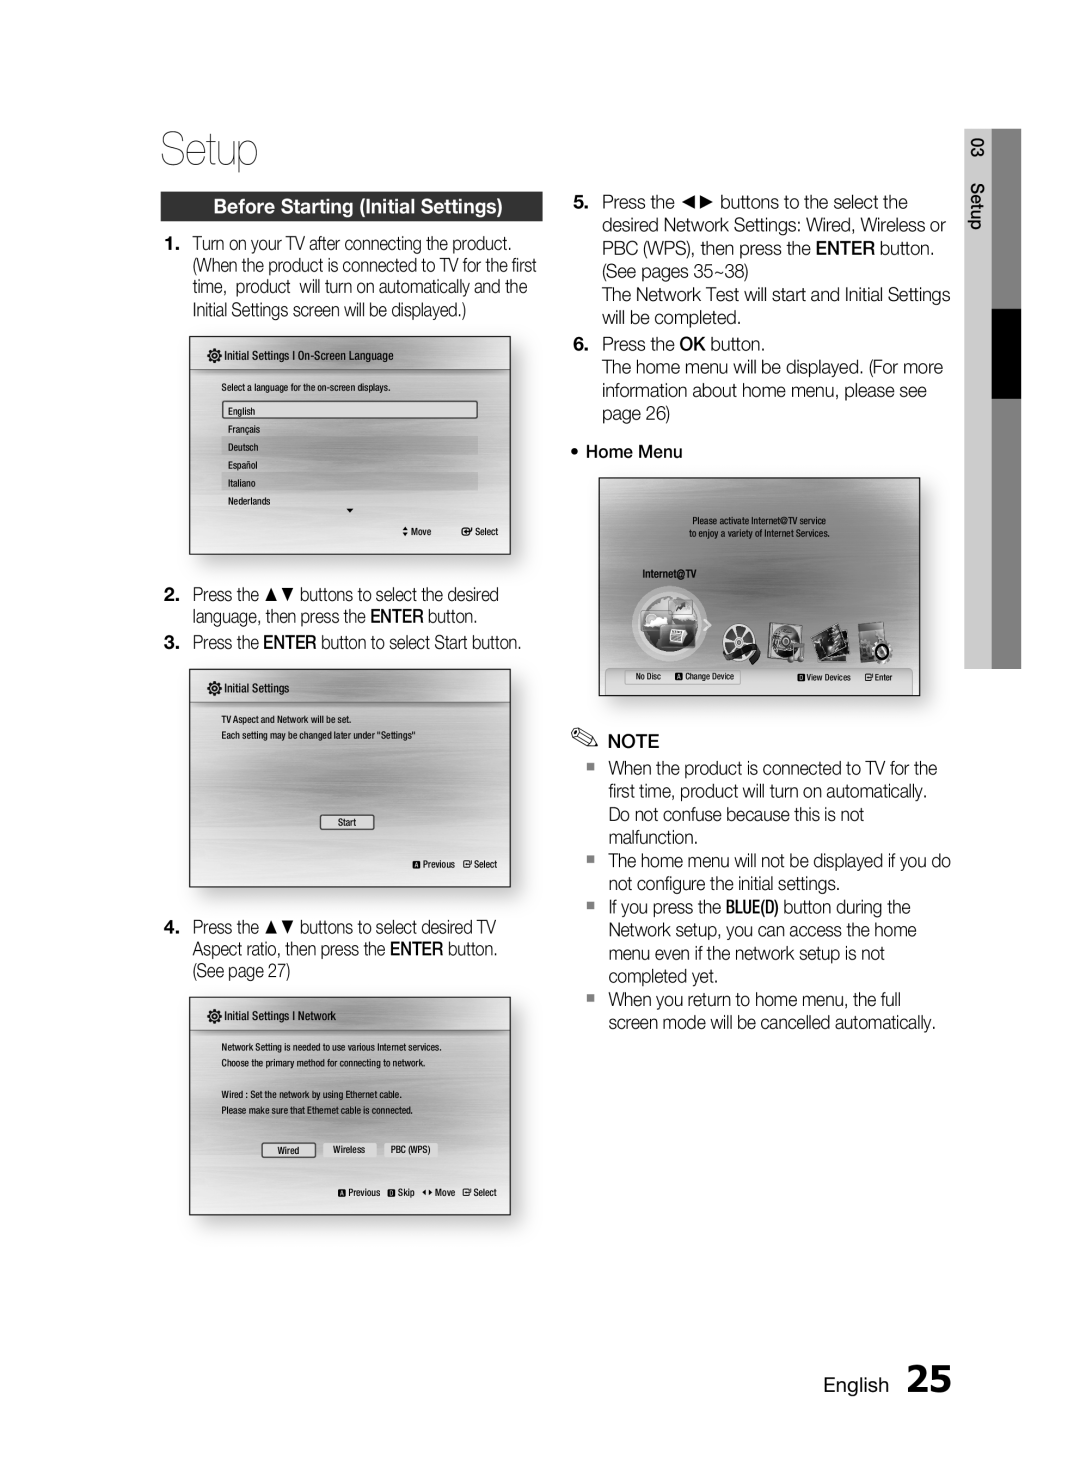 Samsung HT-C5200 user manual Setup, Before Starting Initial Settings, English 